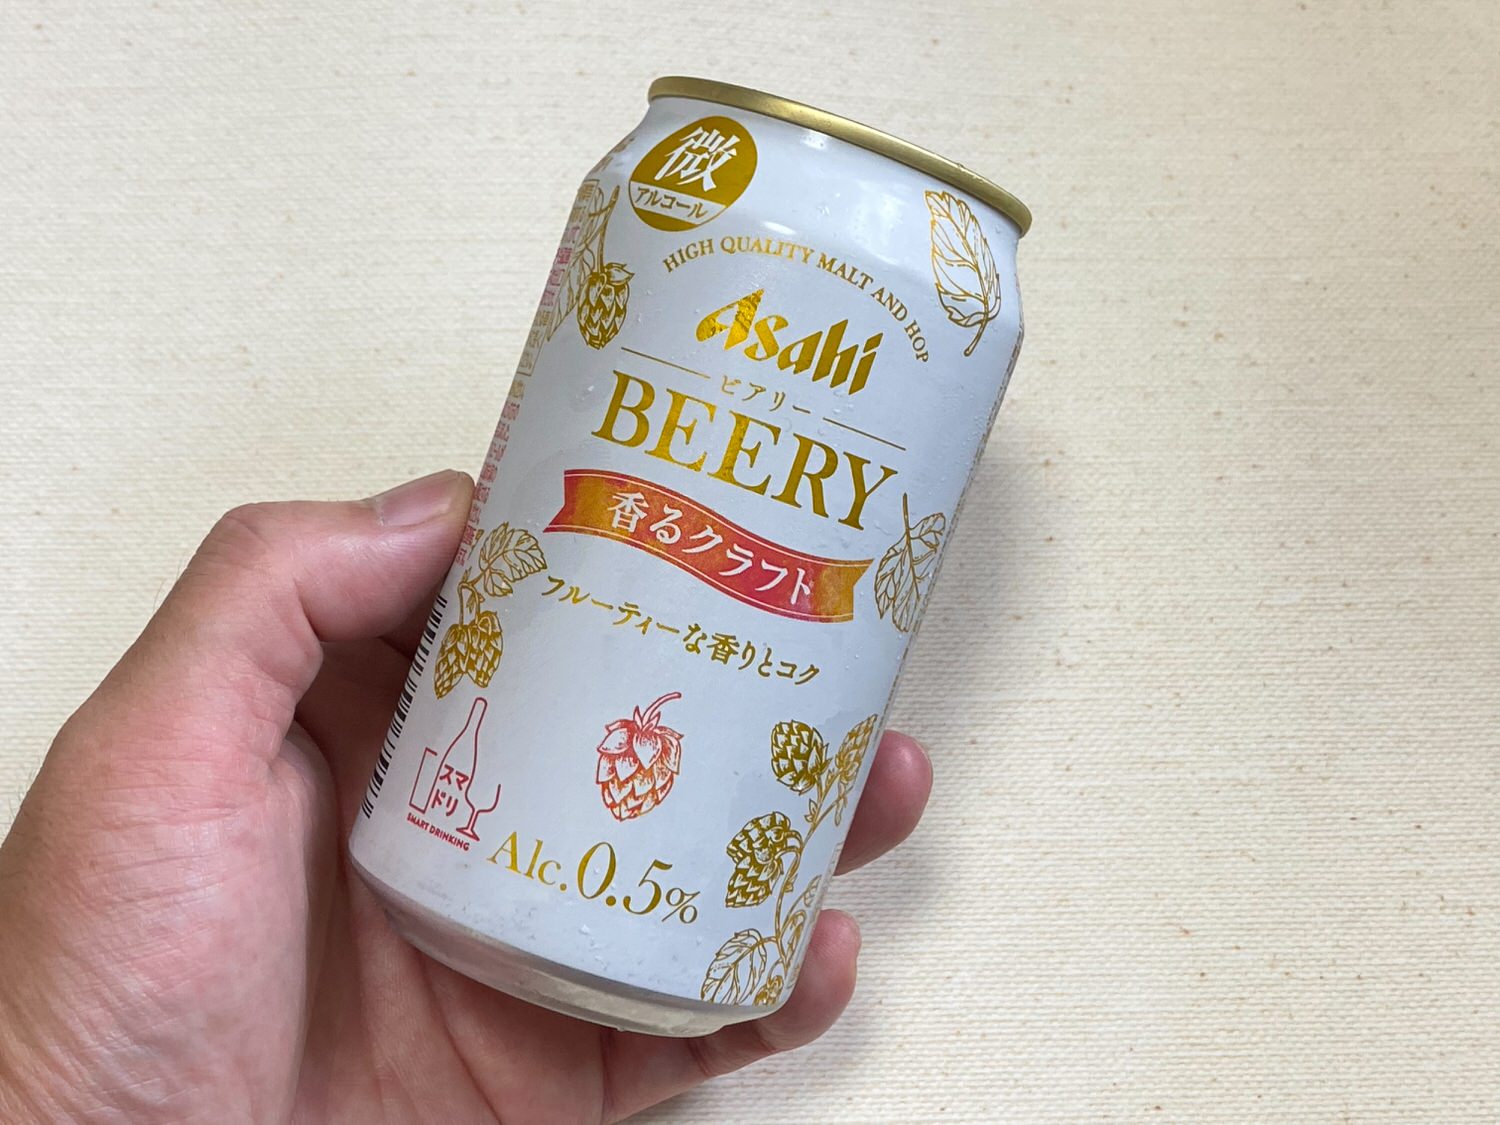 Asahi beery 2 05 04